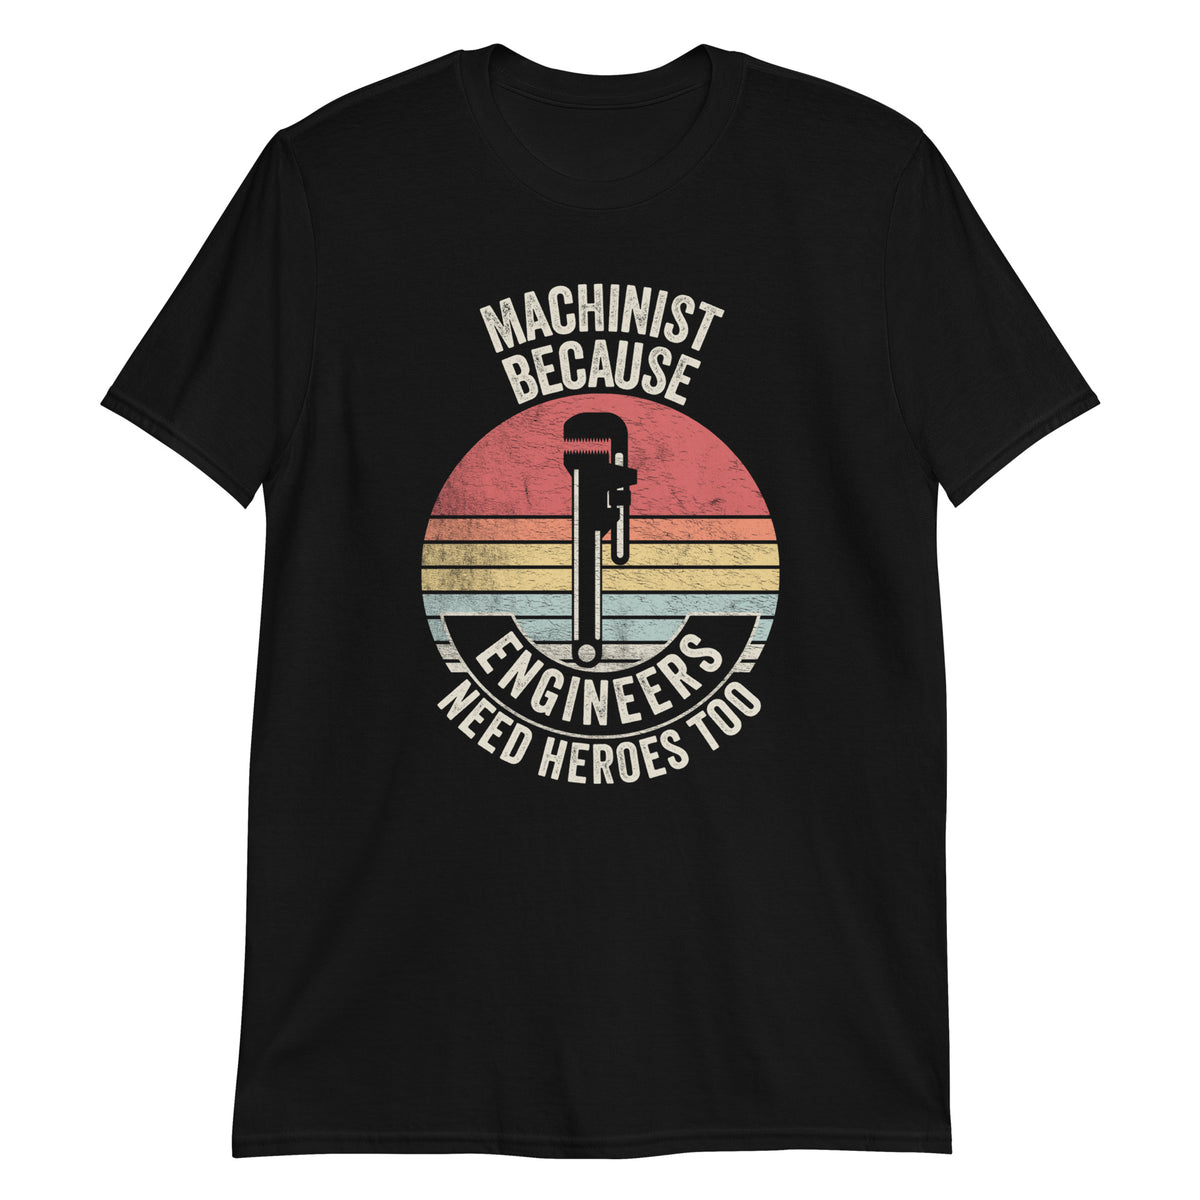 Machinist Because Engineers Need Heros Too T-Shirt